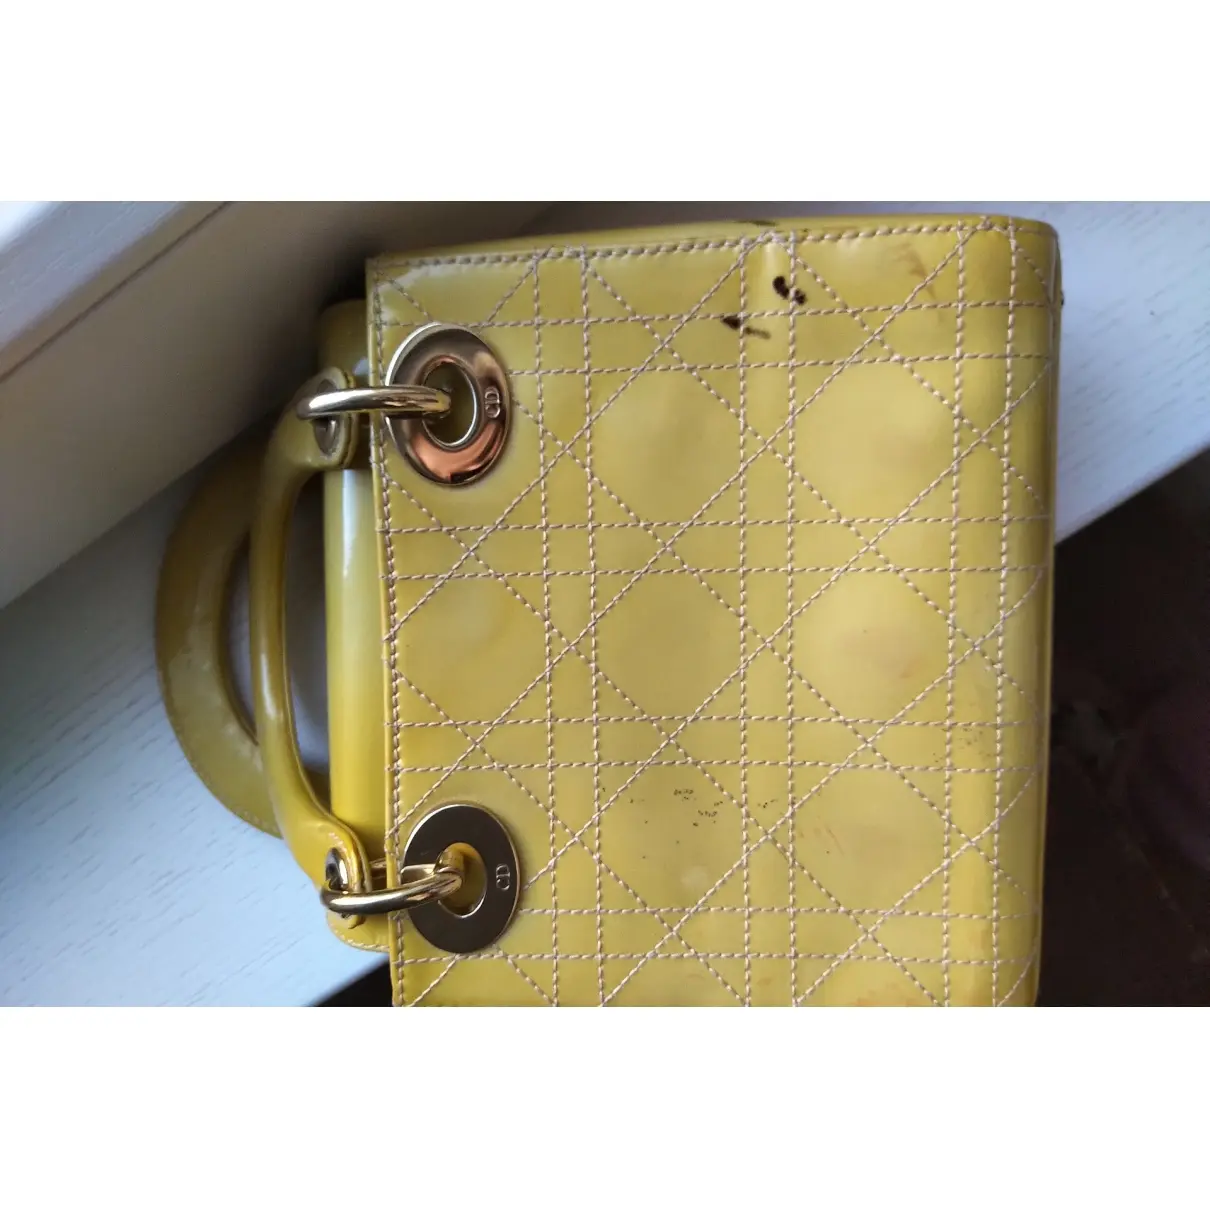 Dior Lady Dior leather handbag for sale